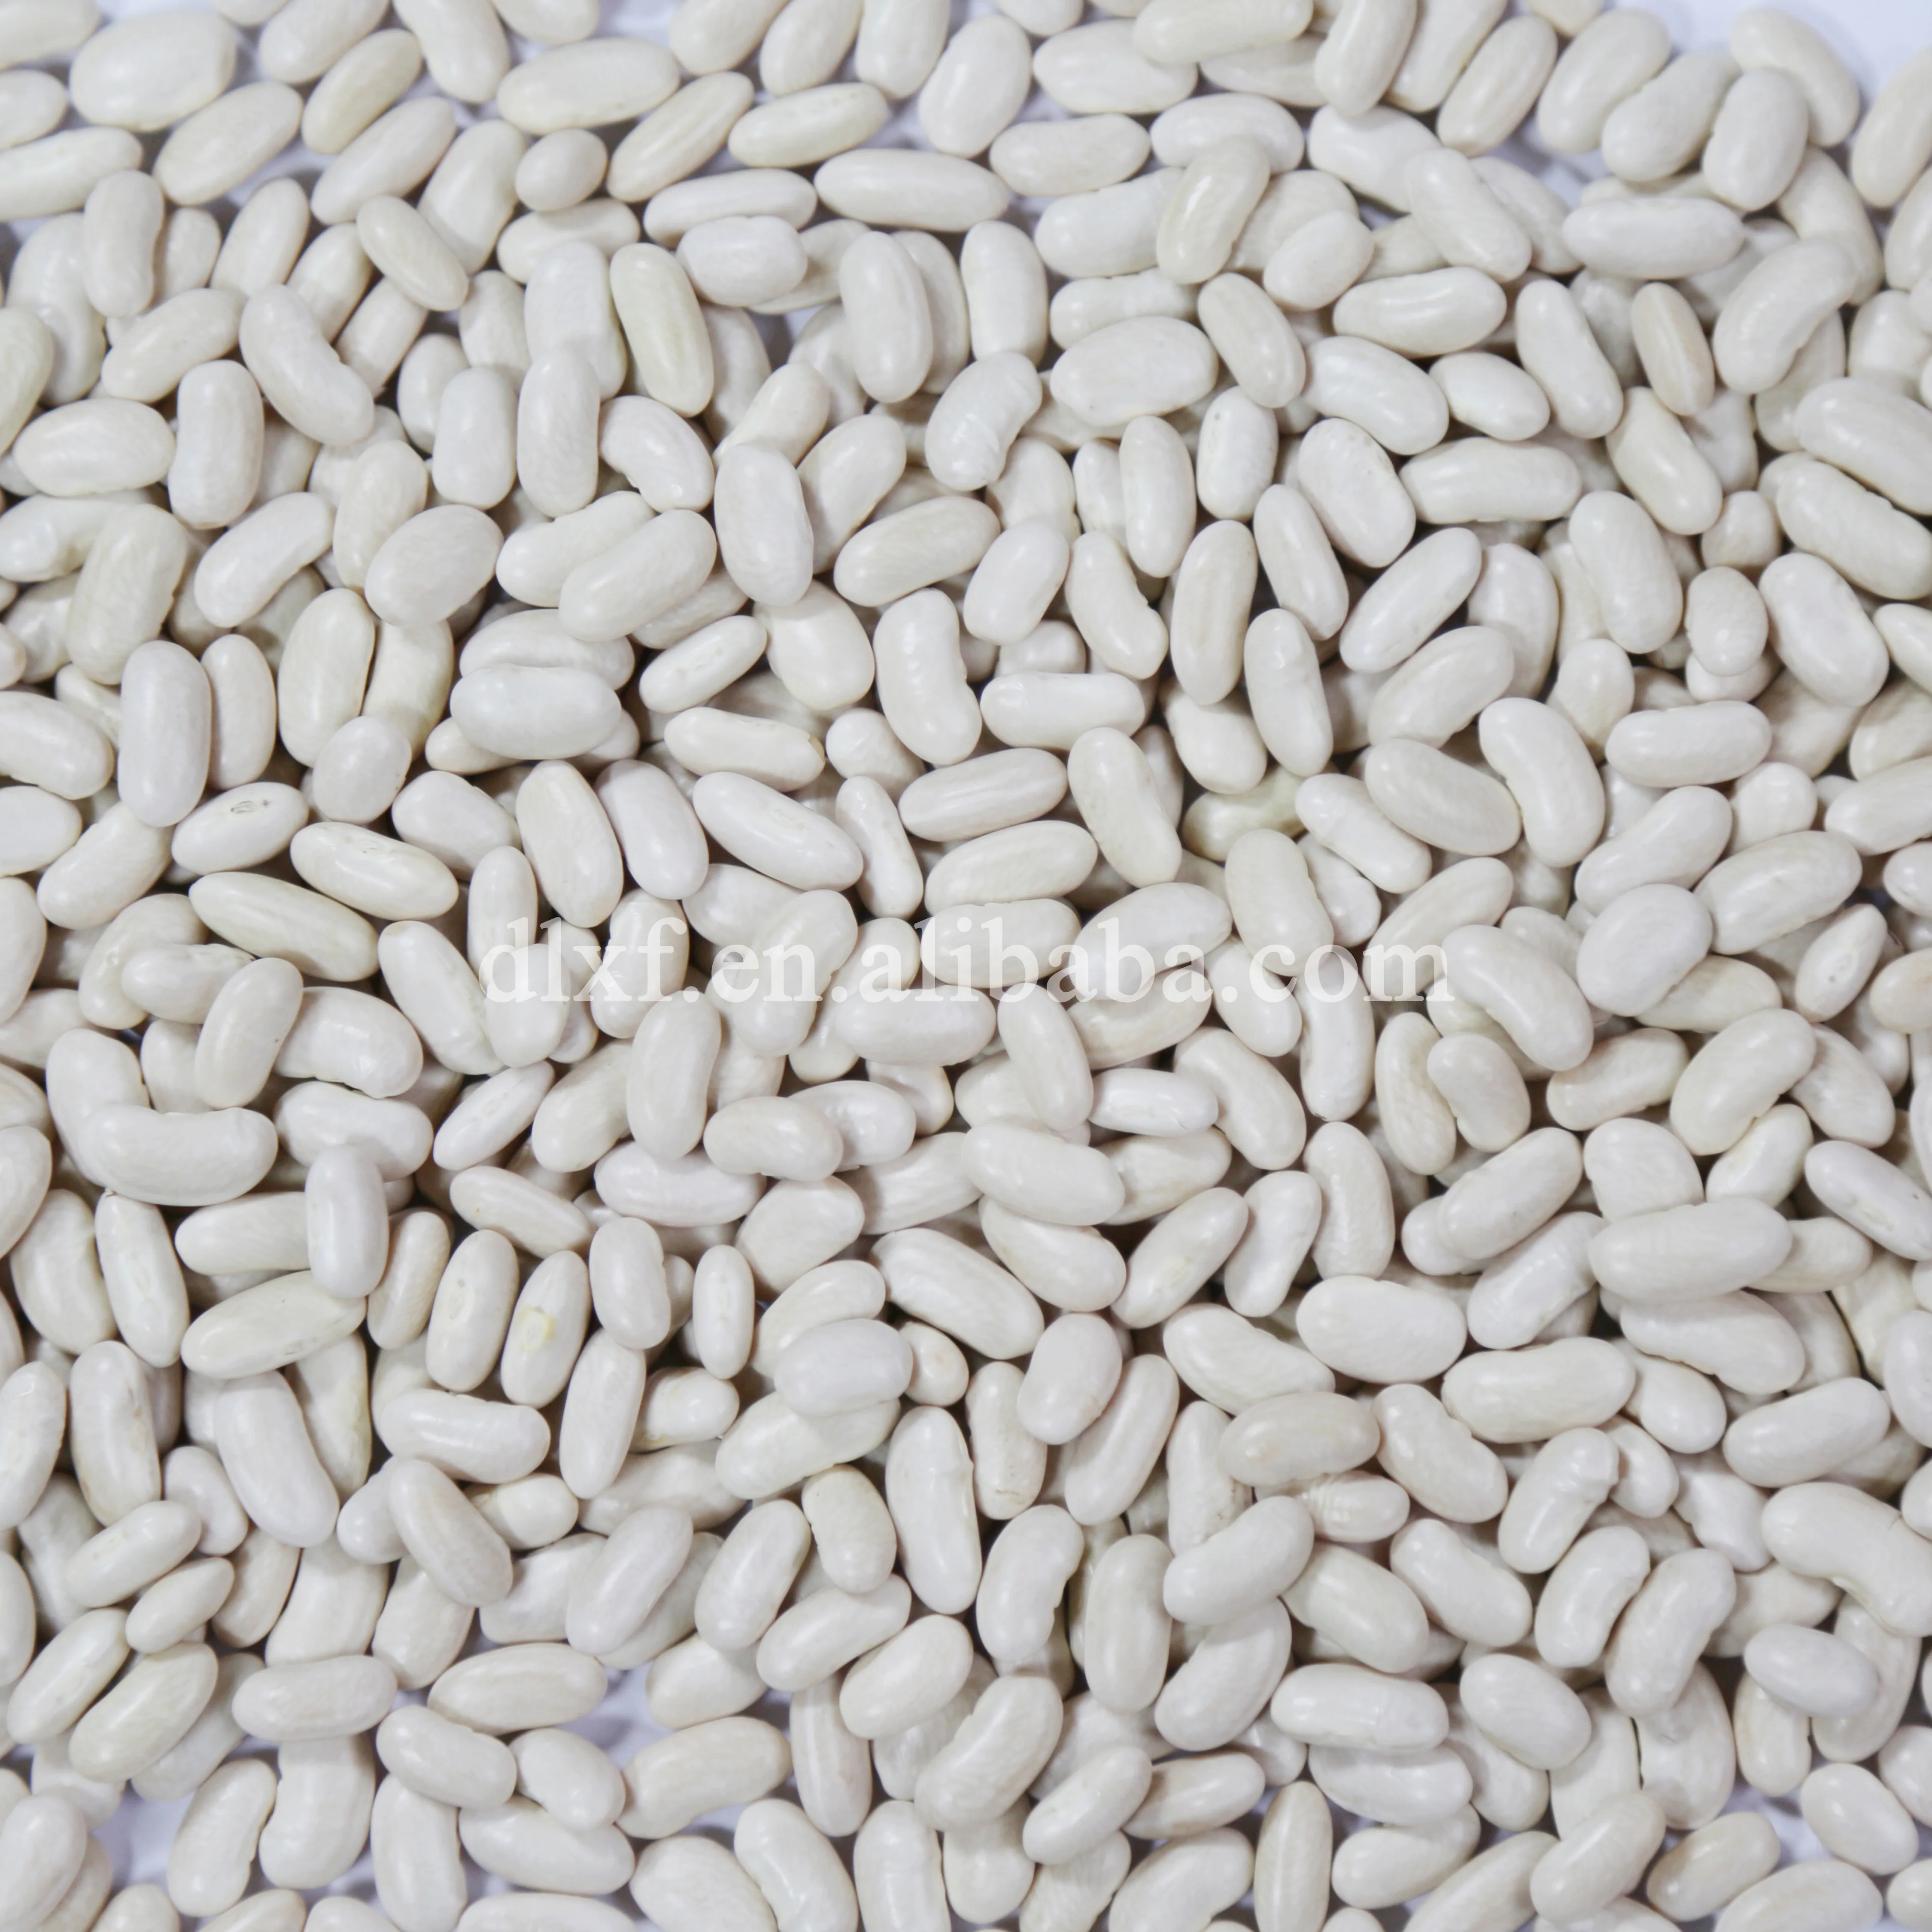 
China white Kidney bean/Japanese non-gmo or organic 